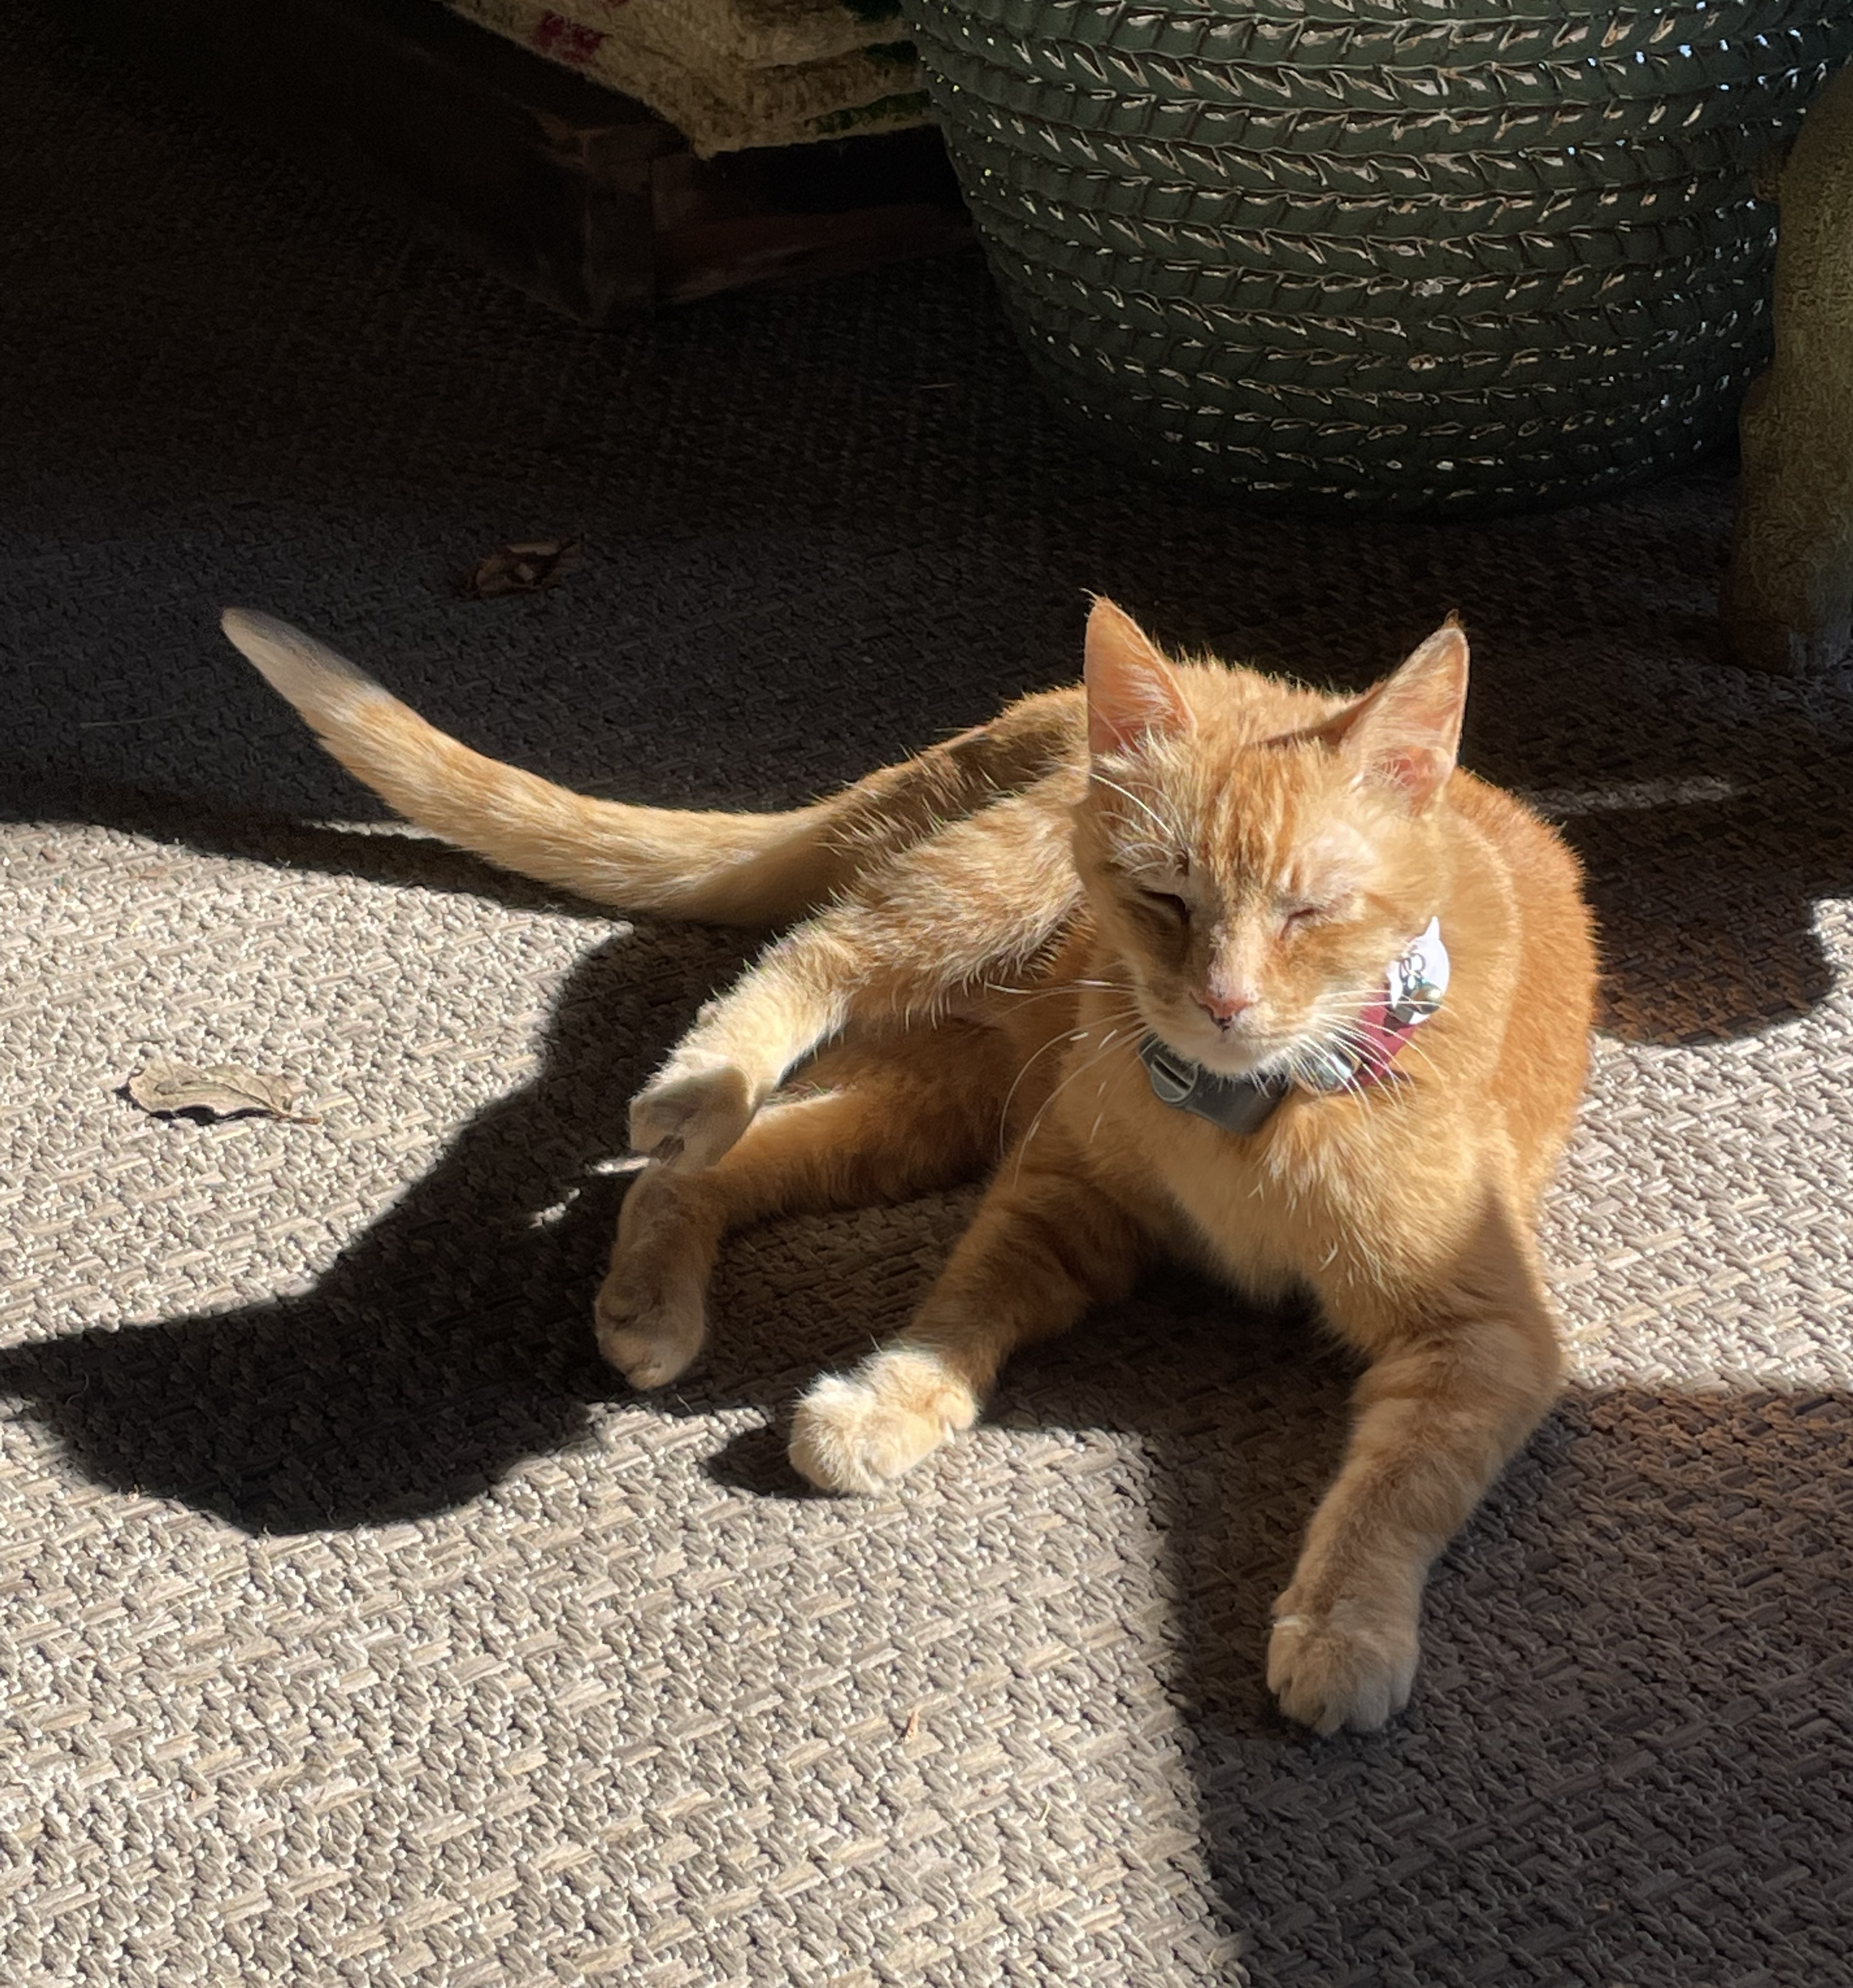 orange cat sunbathing on the ground at gardening shop.